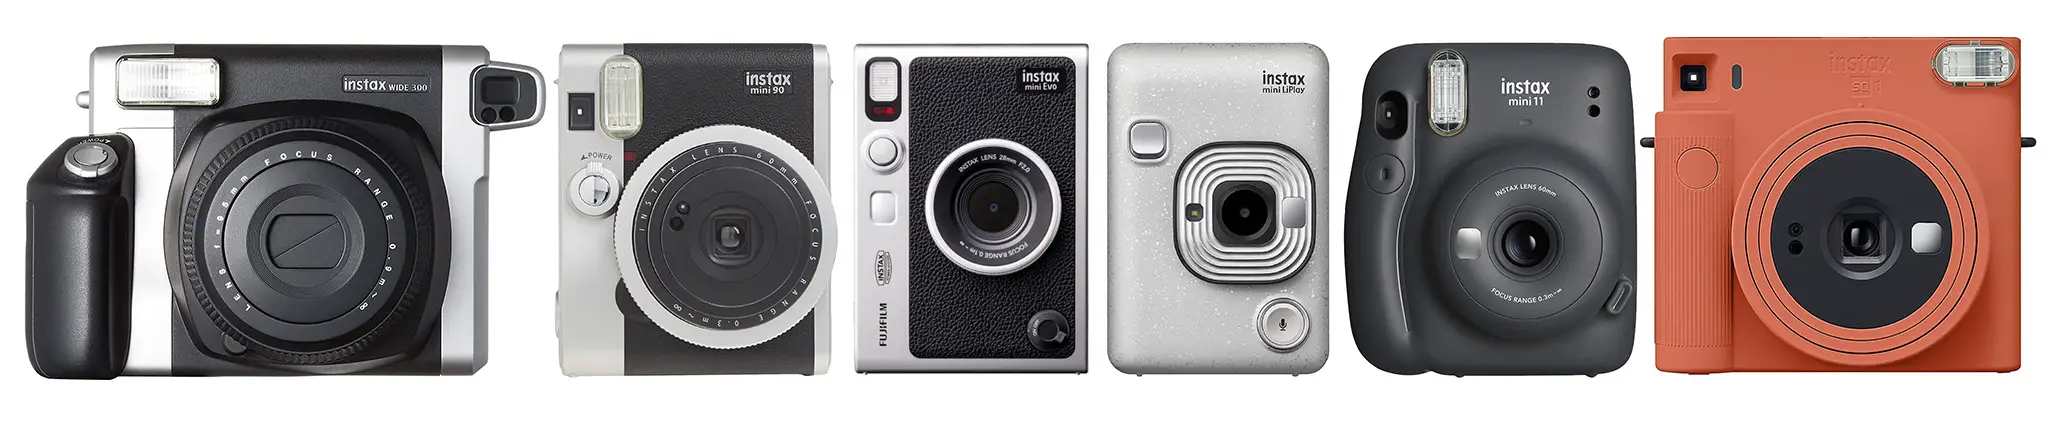 Instax Cameras Lineup in order from left to right: Instax Wide, Instax Mini 90, Mini Evo, Mini LiPlay, Mini 11, SQ1